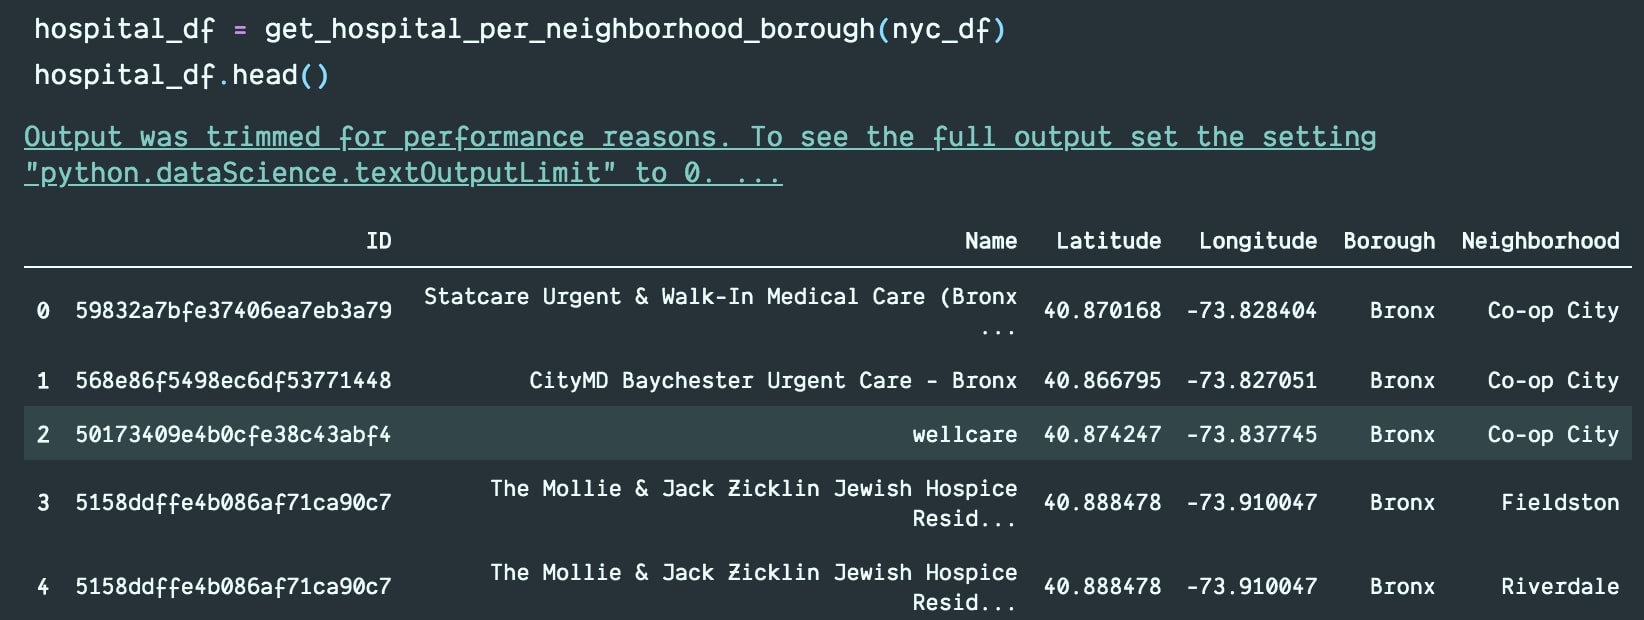 Hospital per borough